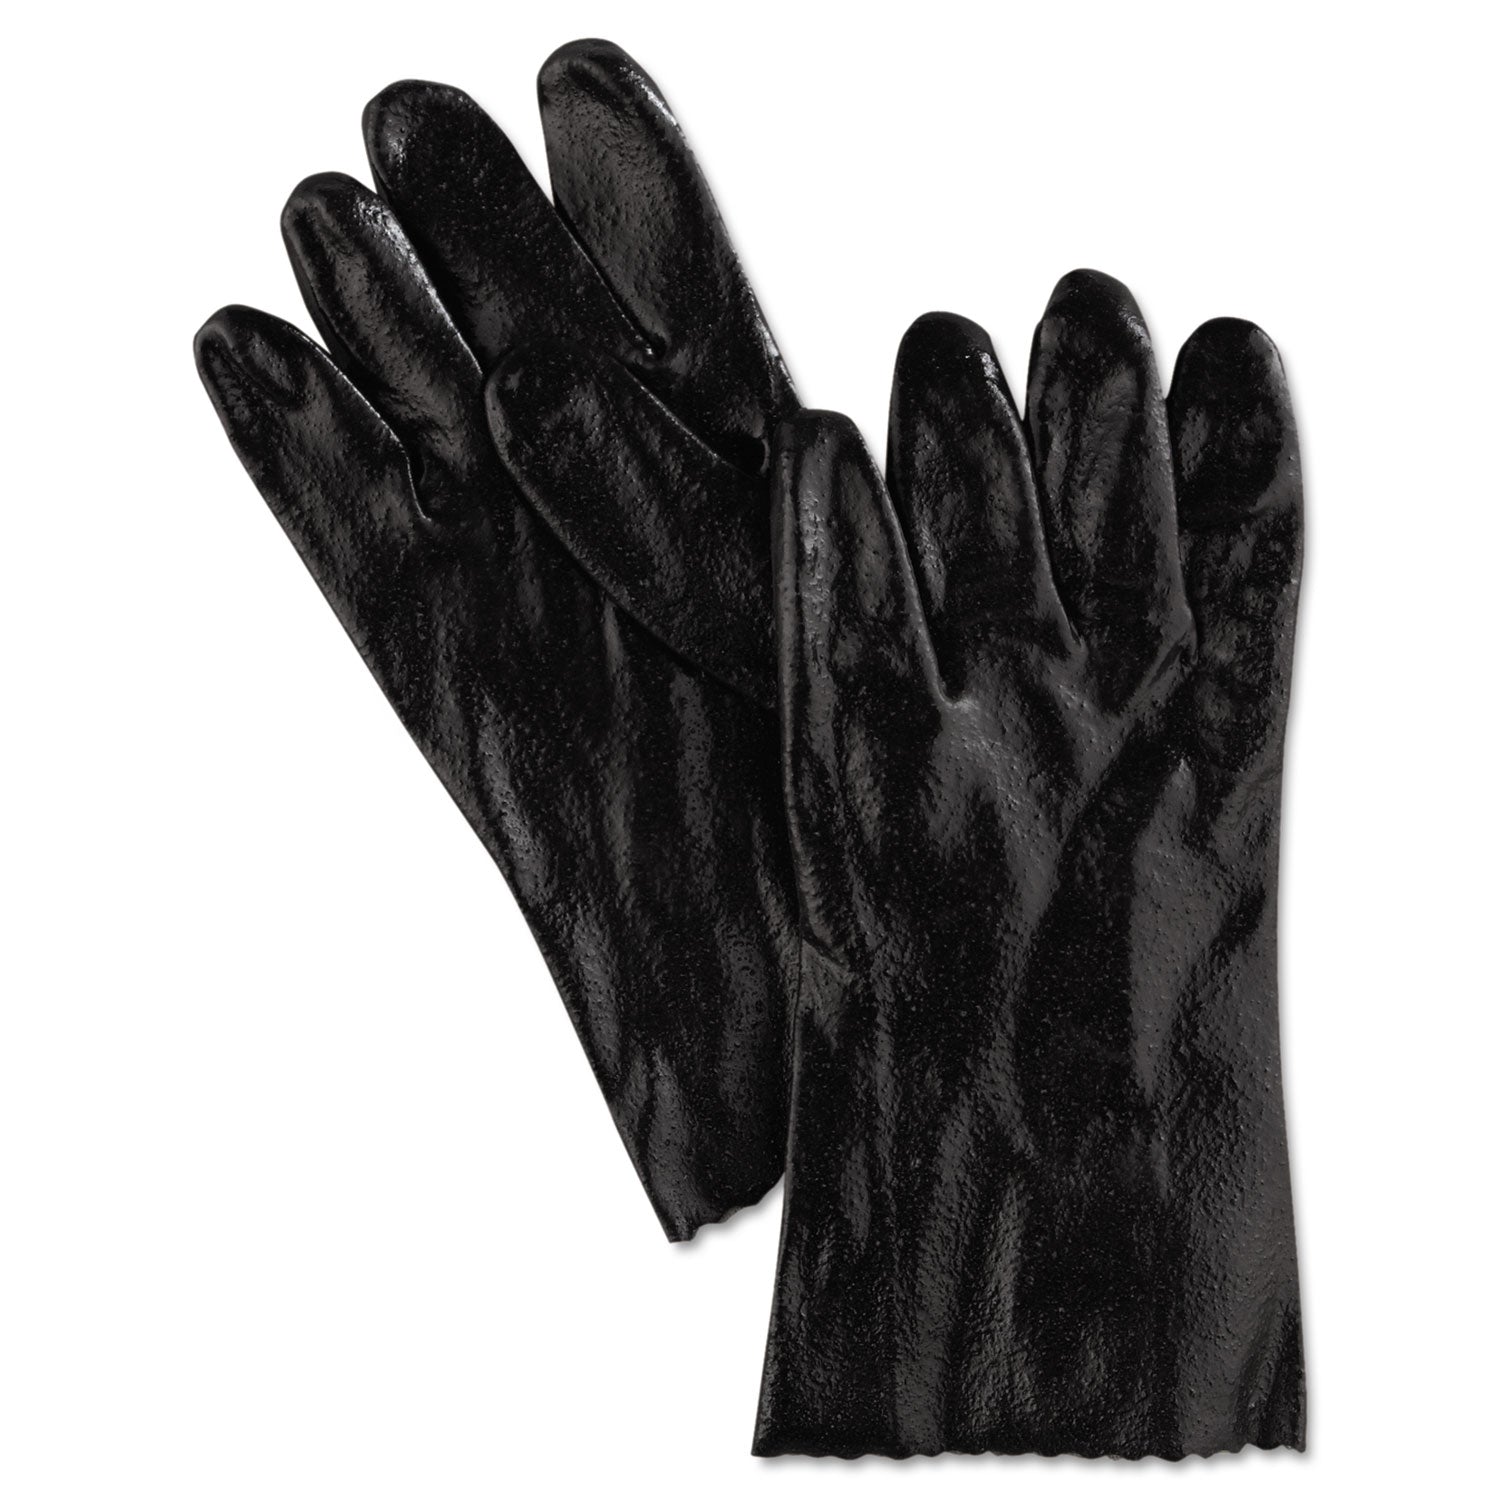 single-dipped-pvc-gloves-rough-interlock-lined-12-long-large-black-12-pair_mpg6212r - 1